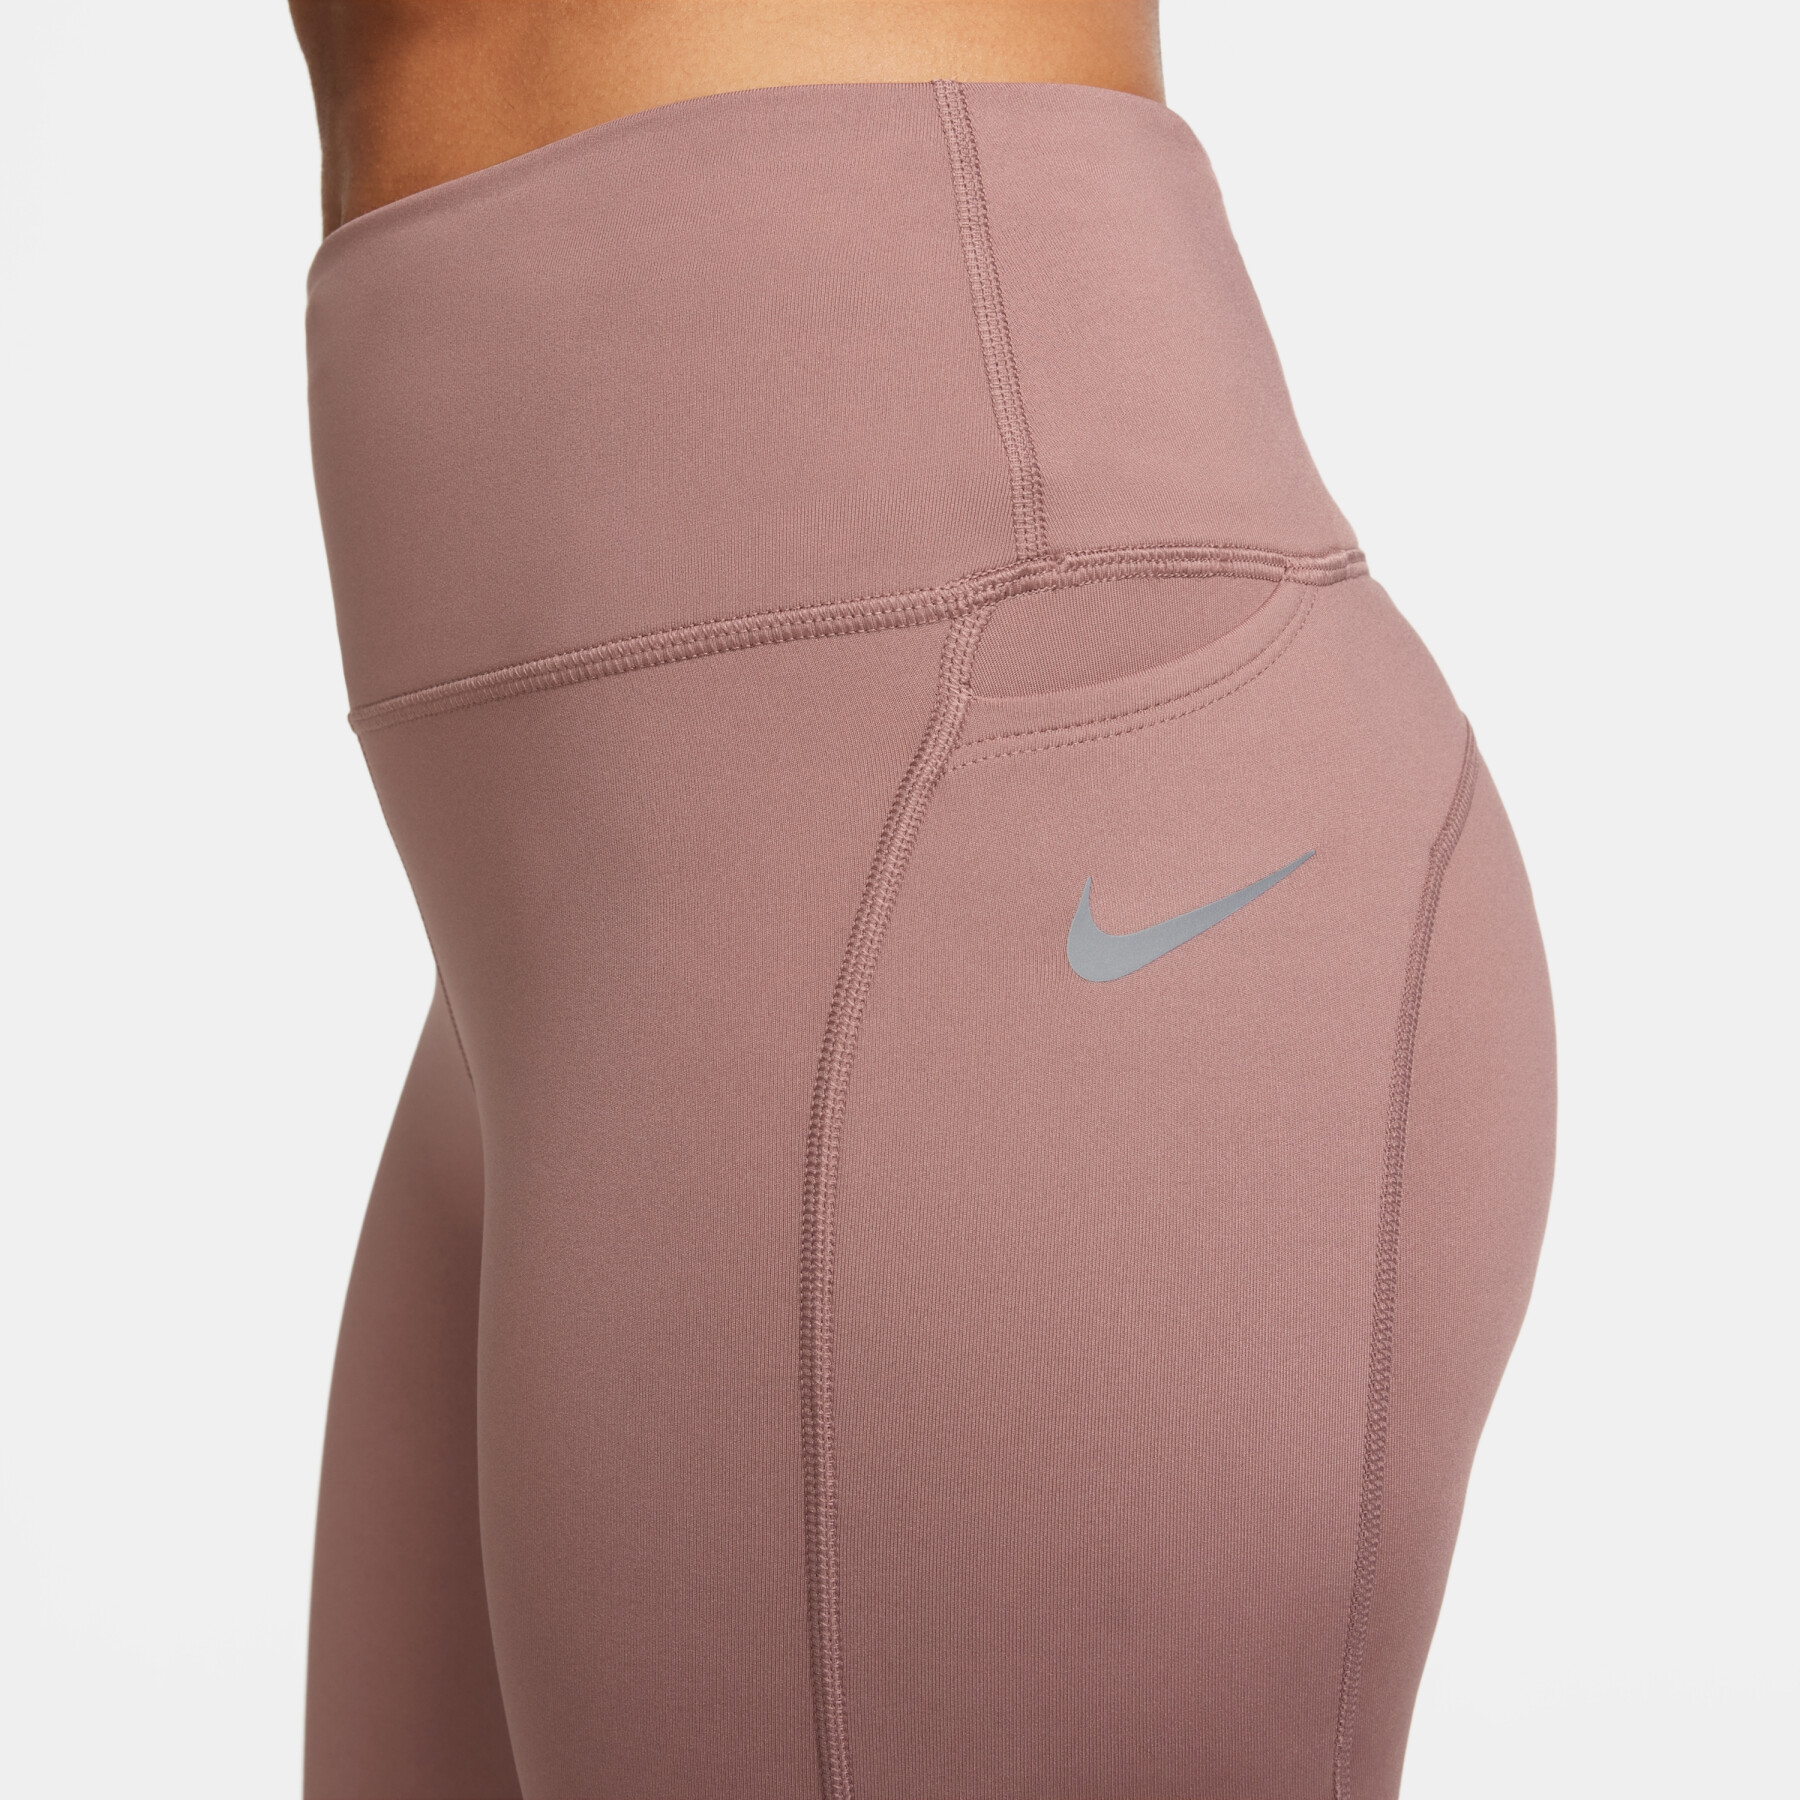 Women's leggings Nike Epic Fast - Textile - Running - Physical